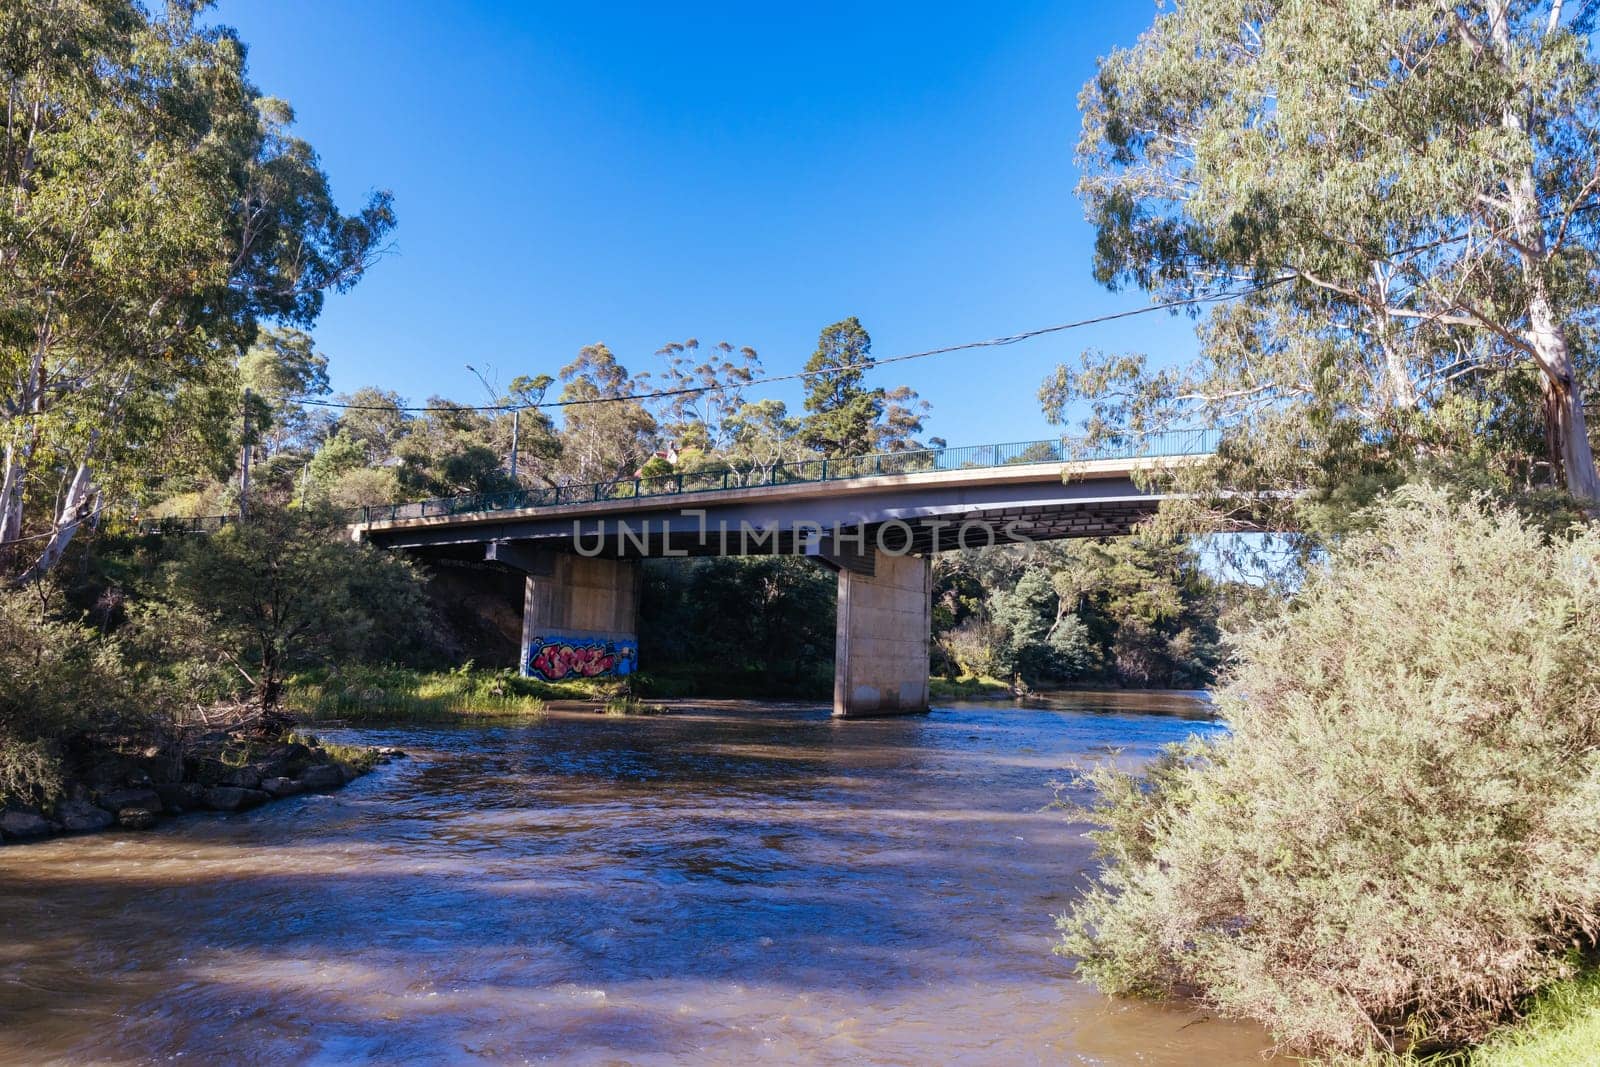 Warrandyte River Reserve and Kangaroo Ground-Warrandyte Rd bridge on a cool autumn day in Warrandyte, Victoria, Australia.